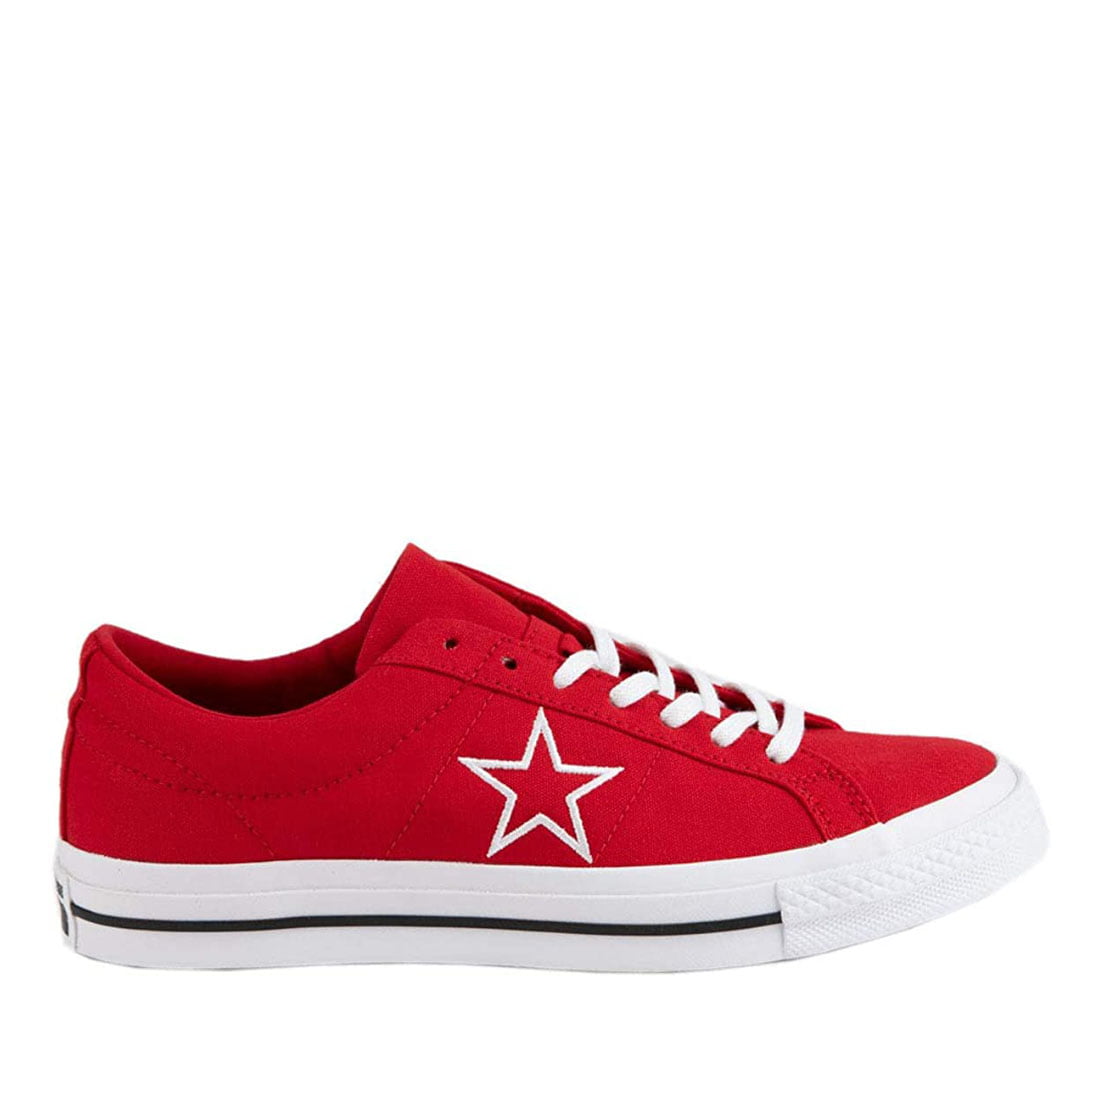 Converse One Star Canvas Unisex/Adult shoe size Men /Women  Athletics  163378C Red/White 